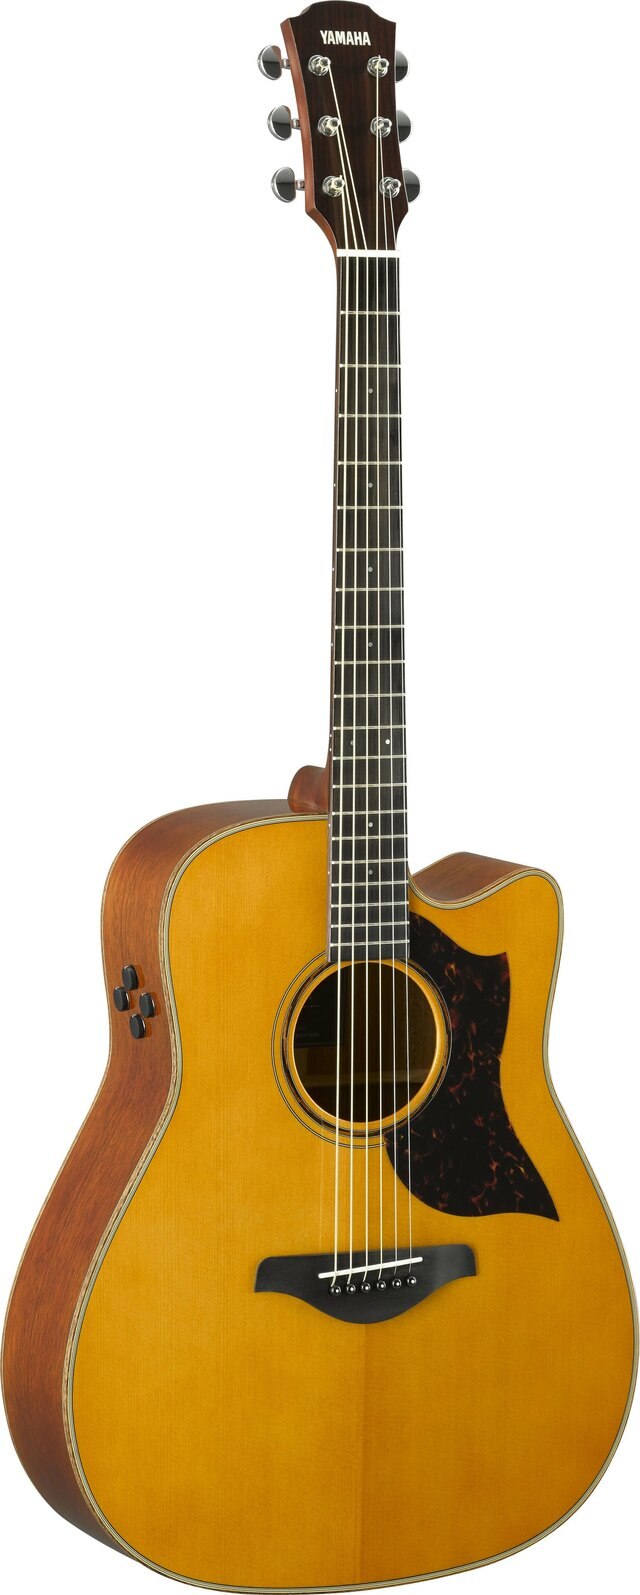 Yamaha A3M Acoustic/Electric Guitar - Vintage Natural